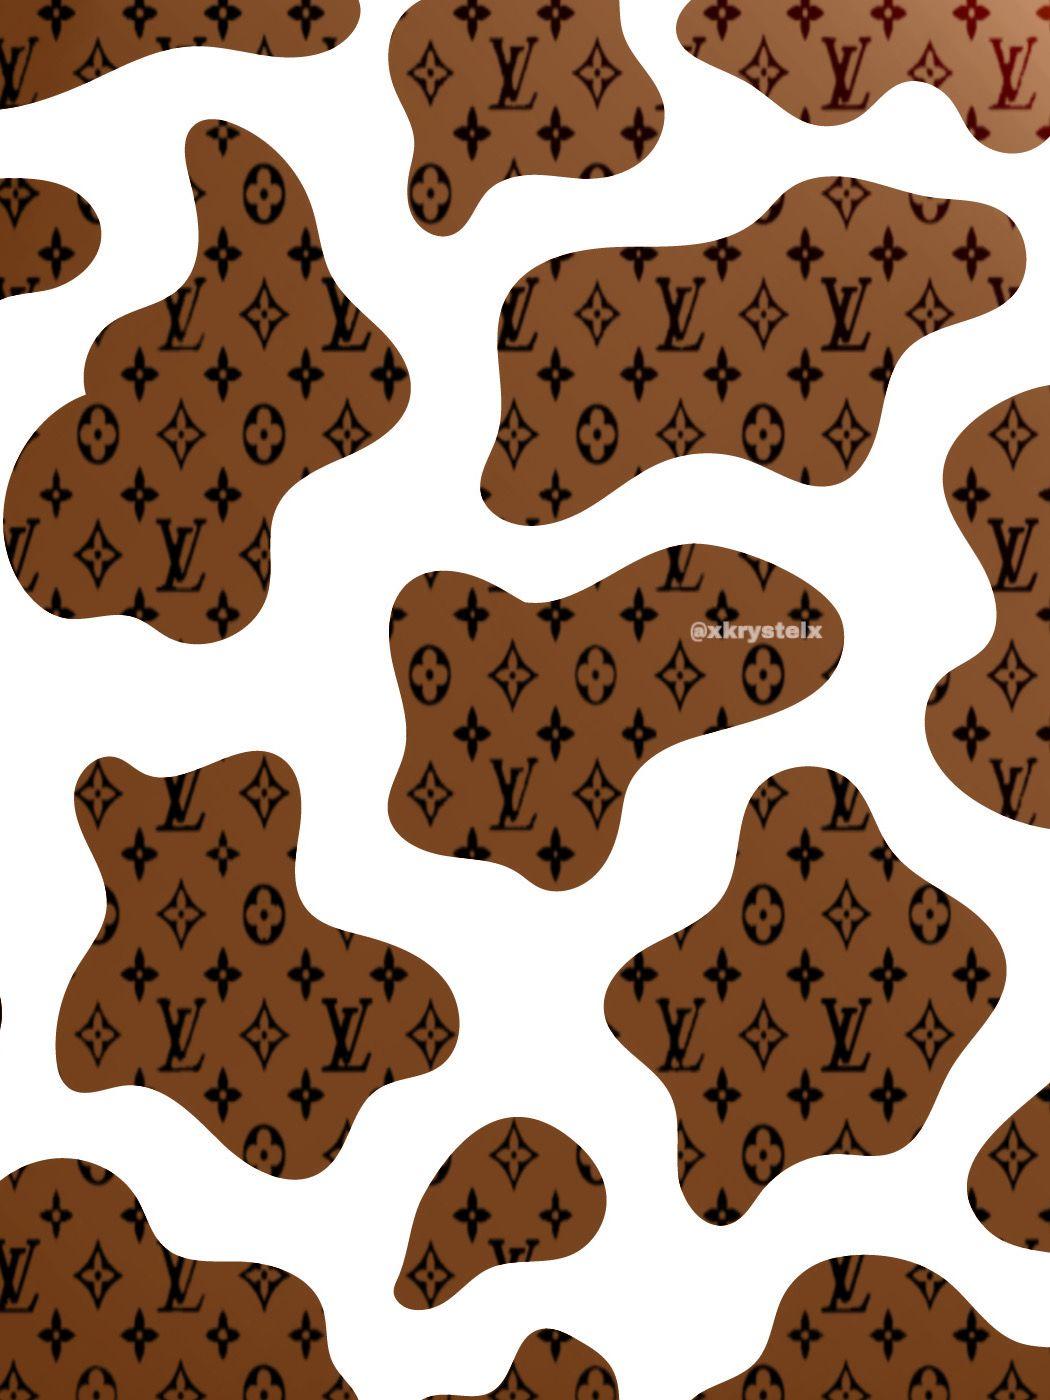 Louis Vuitton Brown wallpaper by buckeyes123020 - Download on ZEDGE™